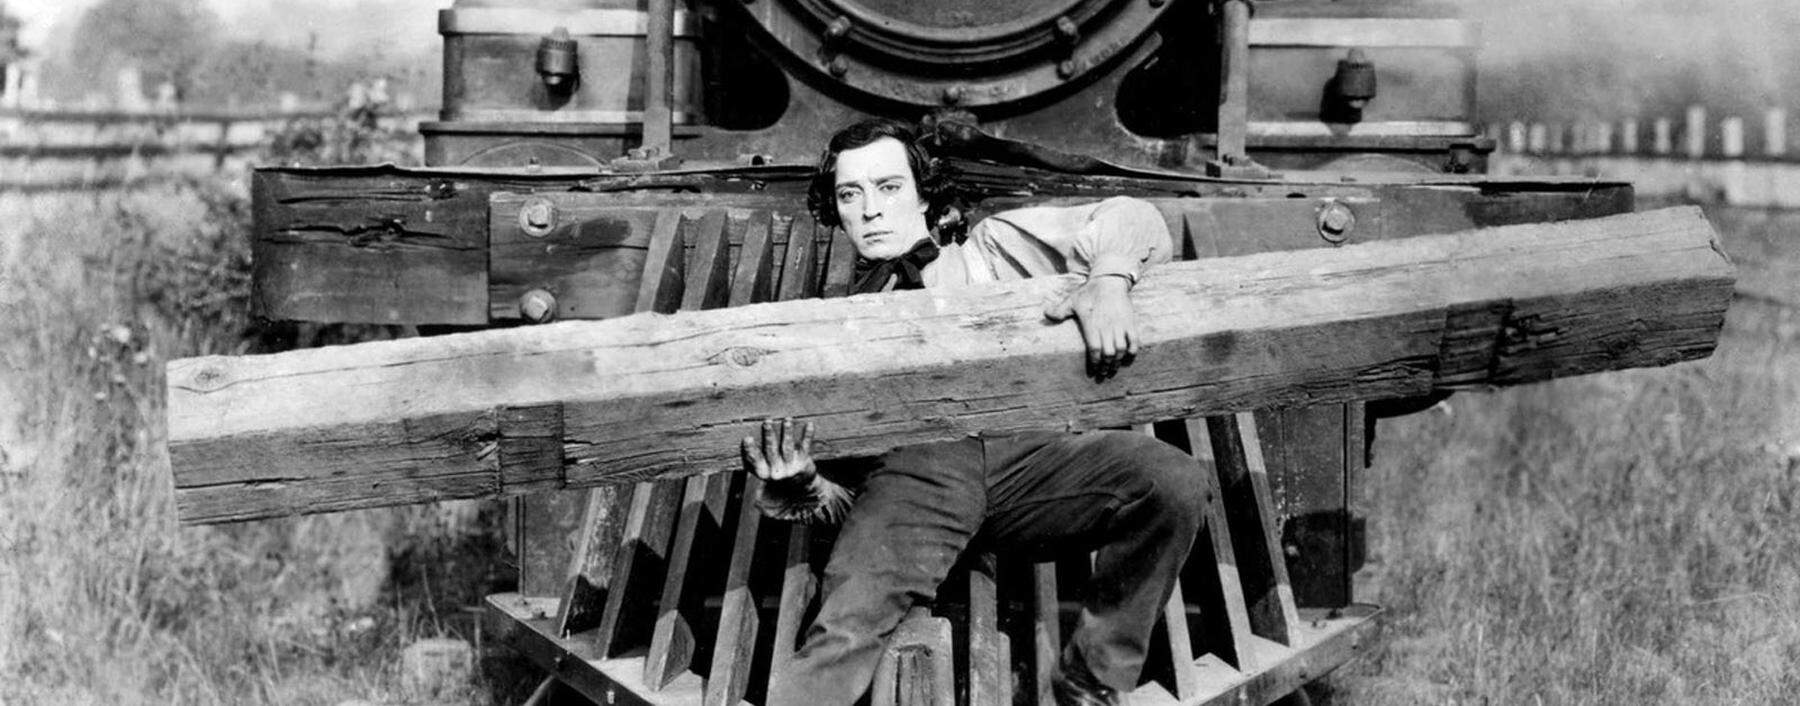 Alles im Lot auf der Lok: Buster Keaton in „The General“. 